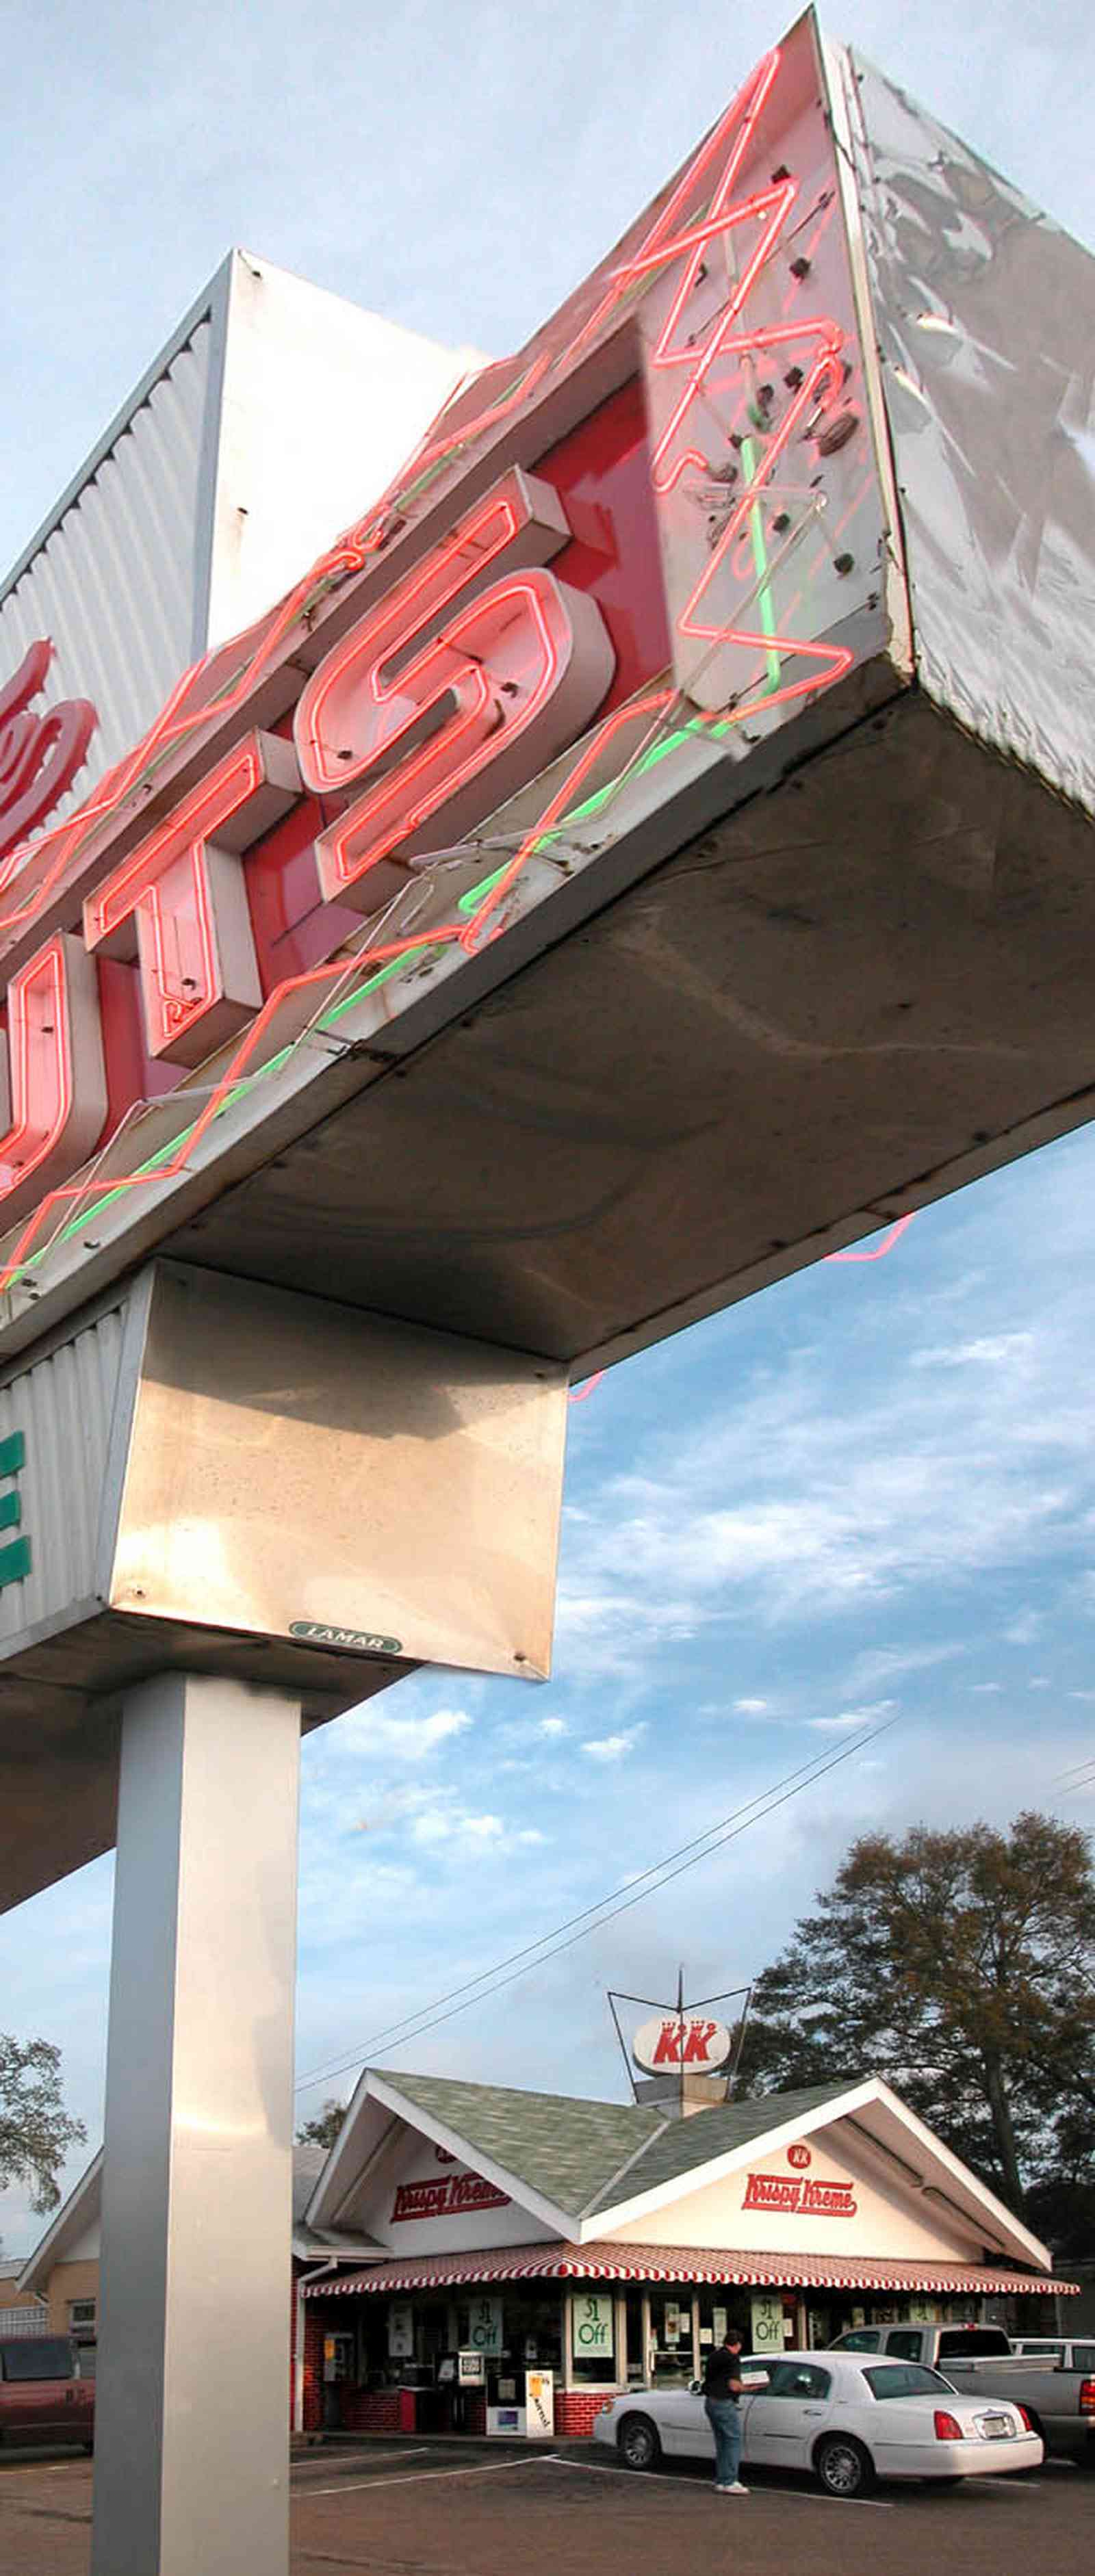 East-Hill:-Krispy-Kreme-Donut-Shop_01.jpg:  donuts, hot donuts, donut shop, 1950's design, neon sign, stainless steel sign, striped awning